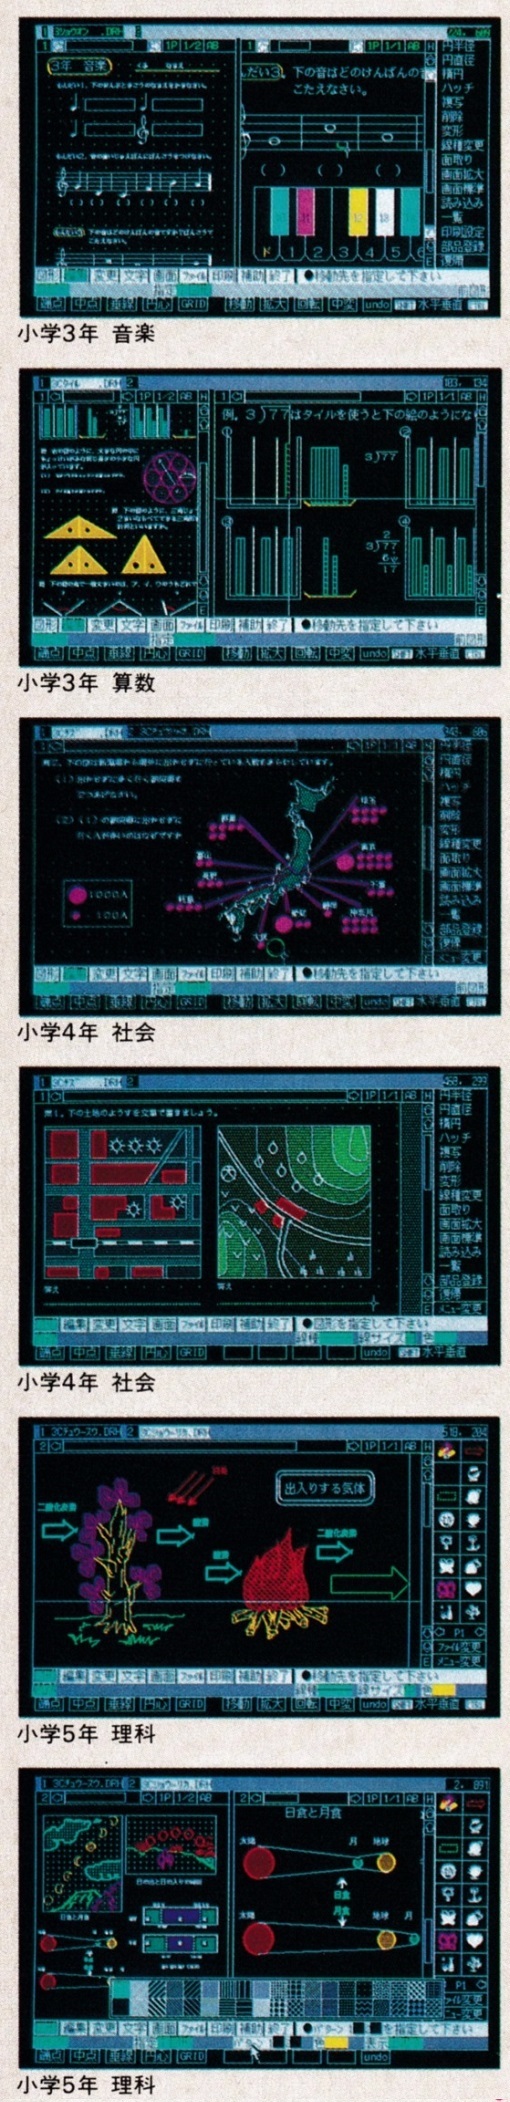 ASCII1987(03)a15花子_教材1_W510.jpg